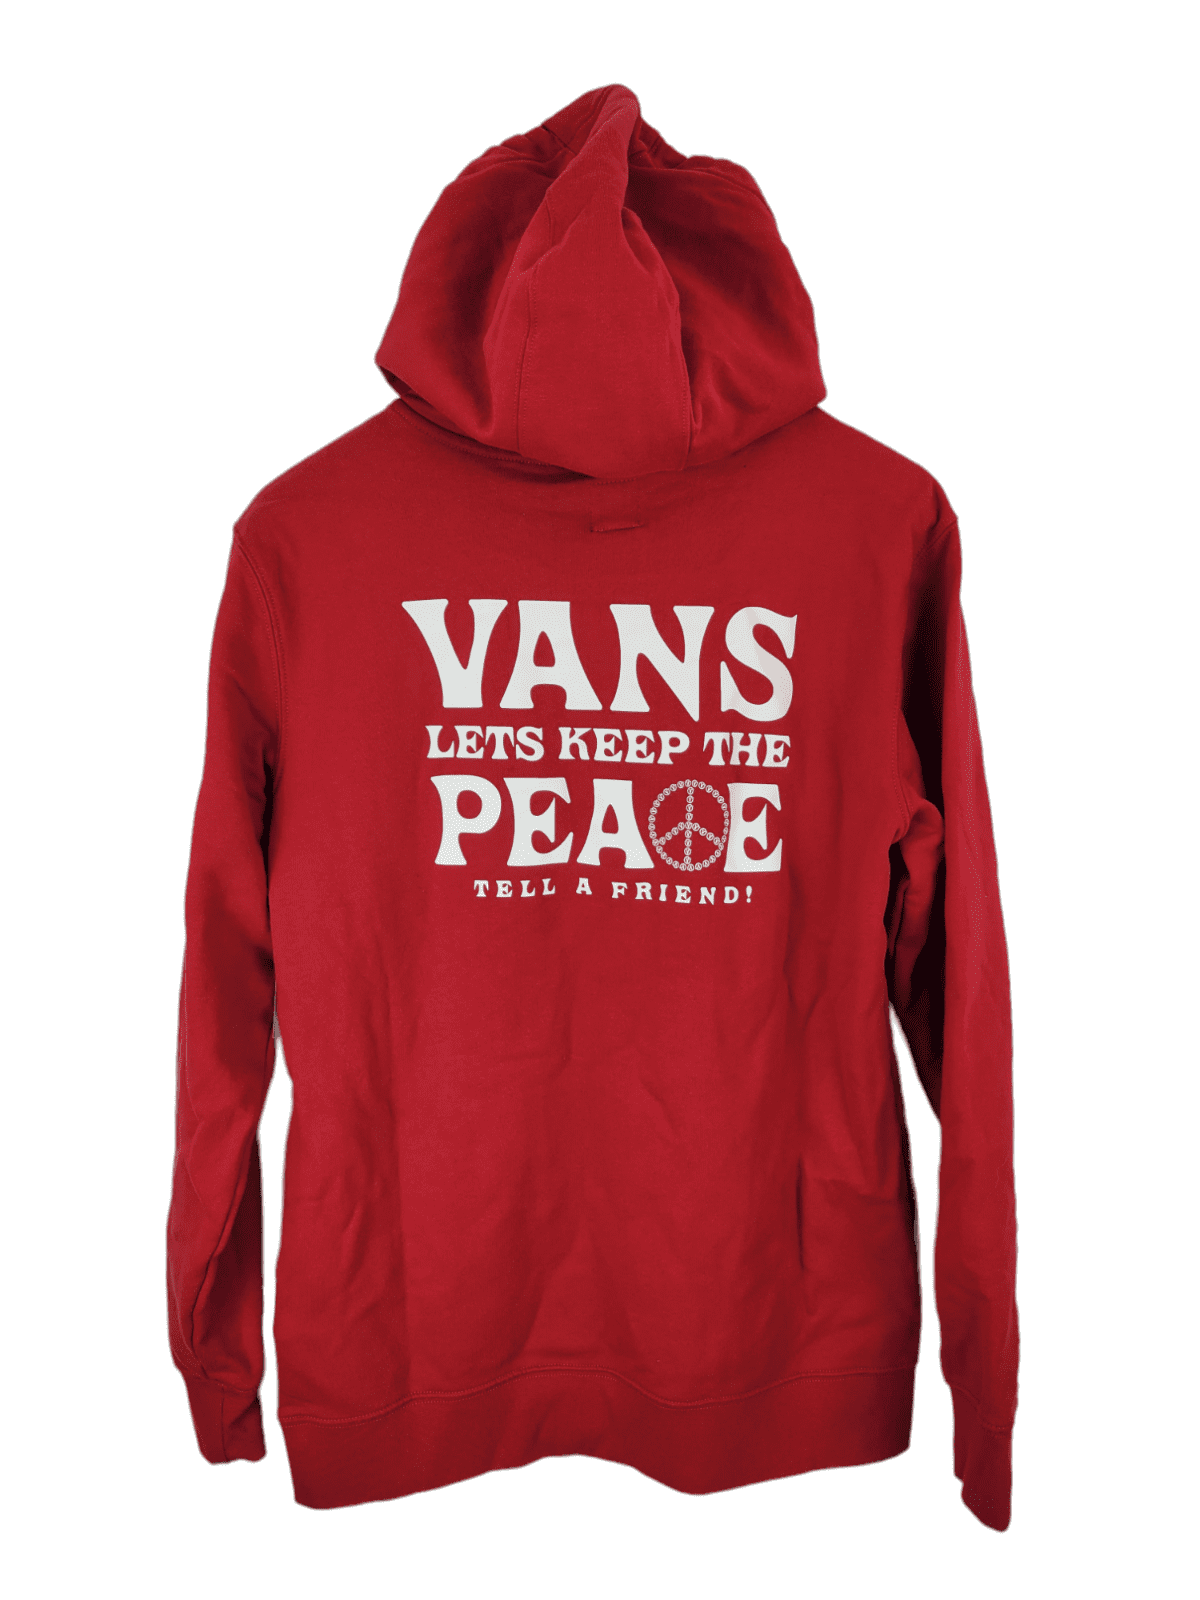 Vans Keep Peace Pullover Size S Walmart.com